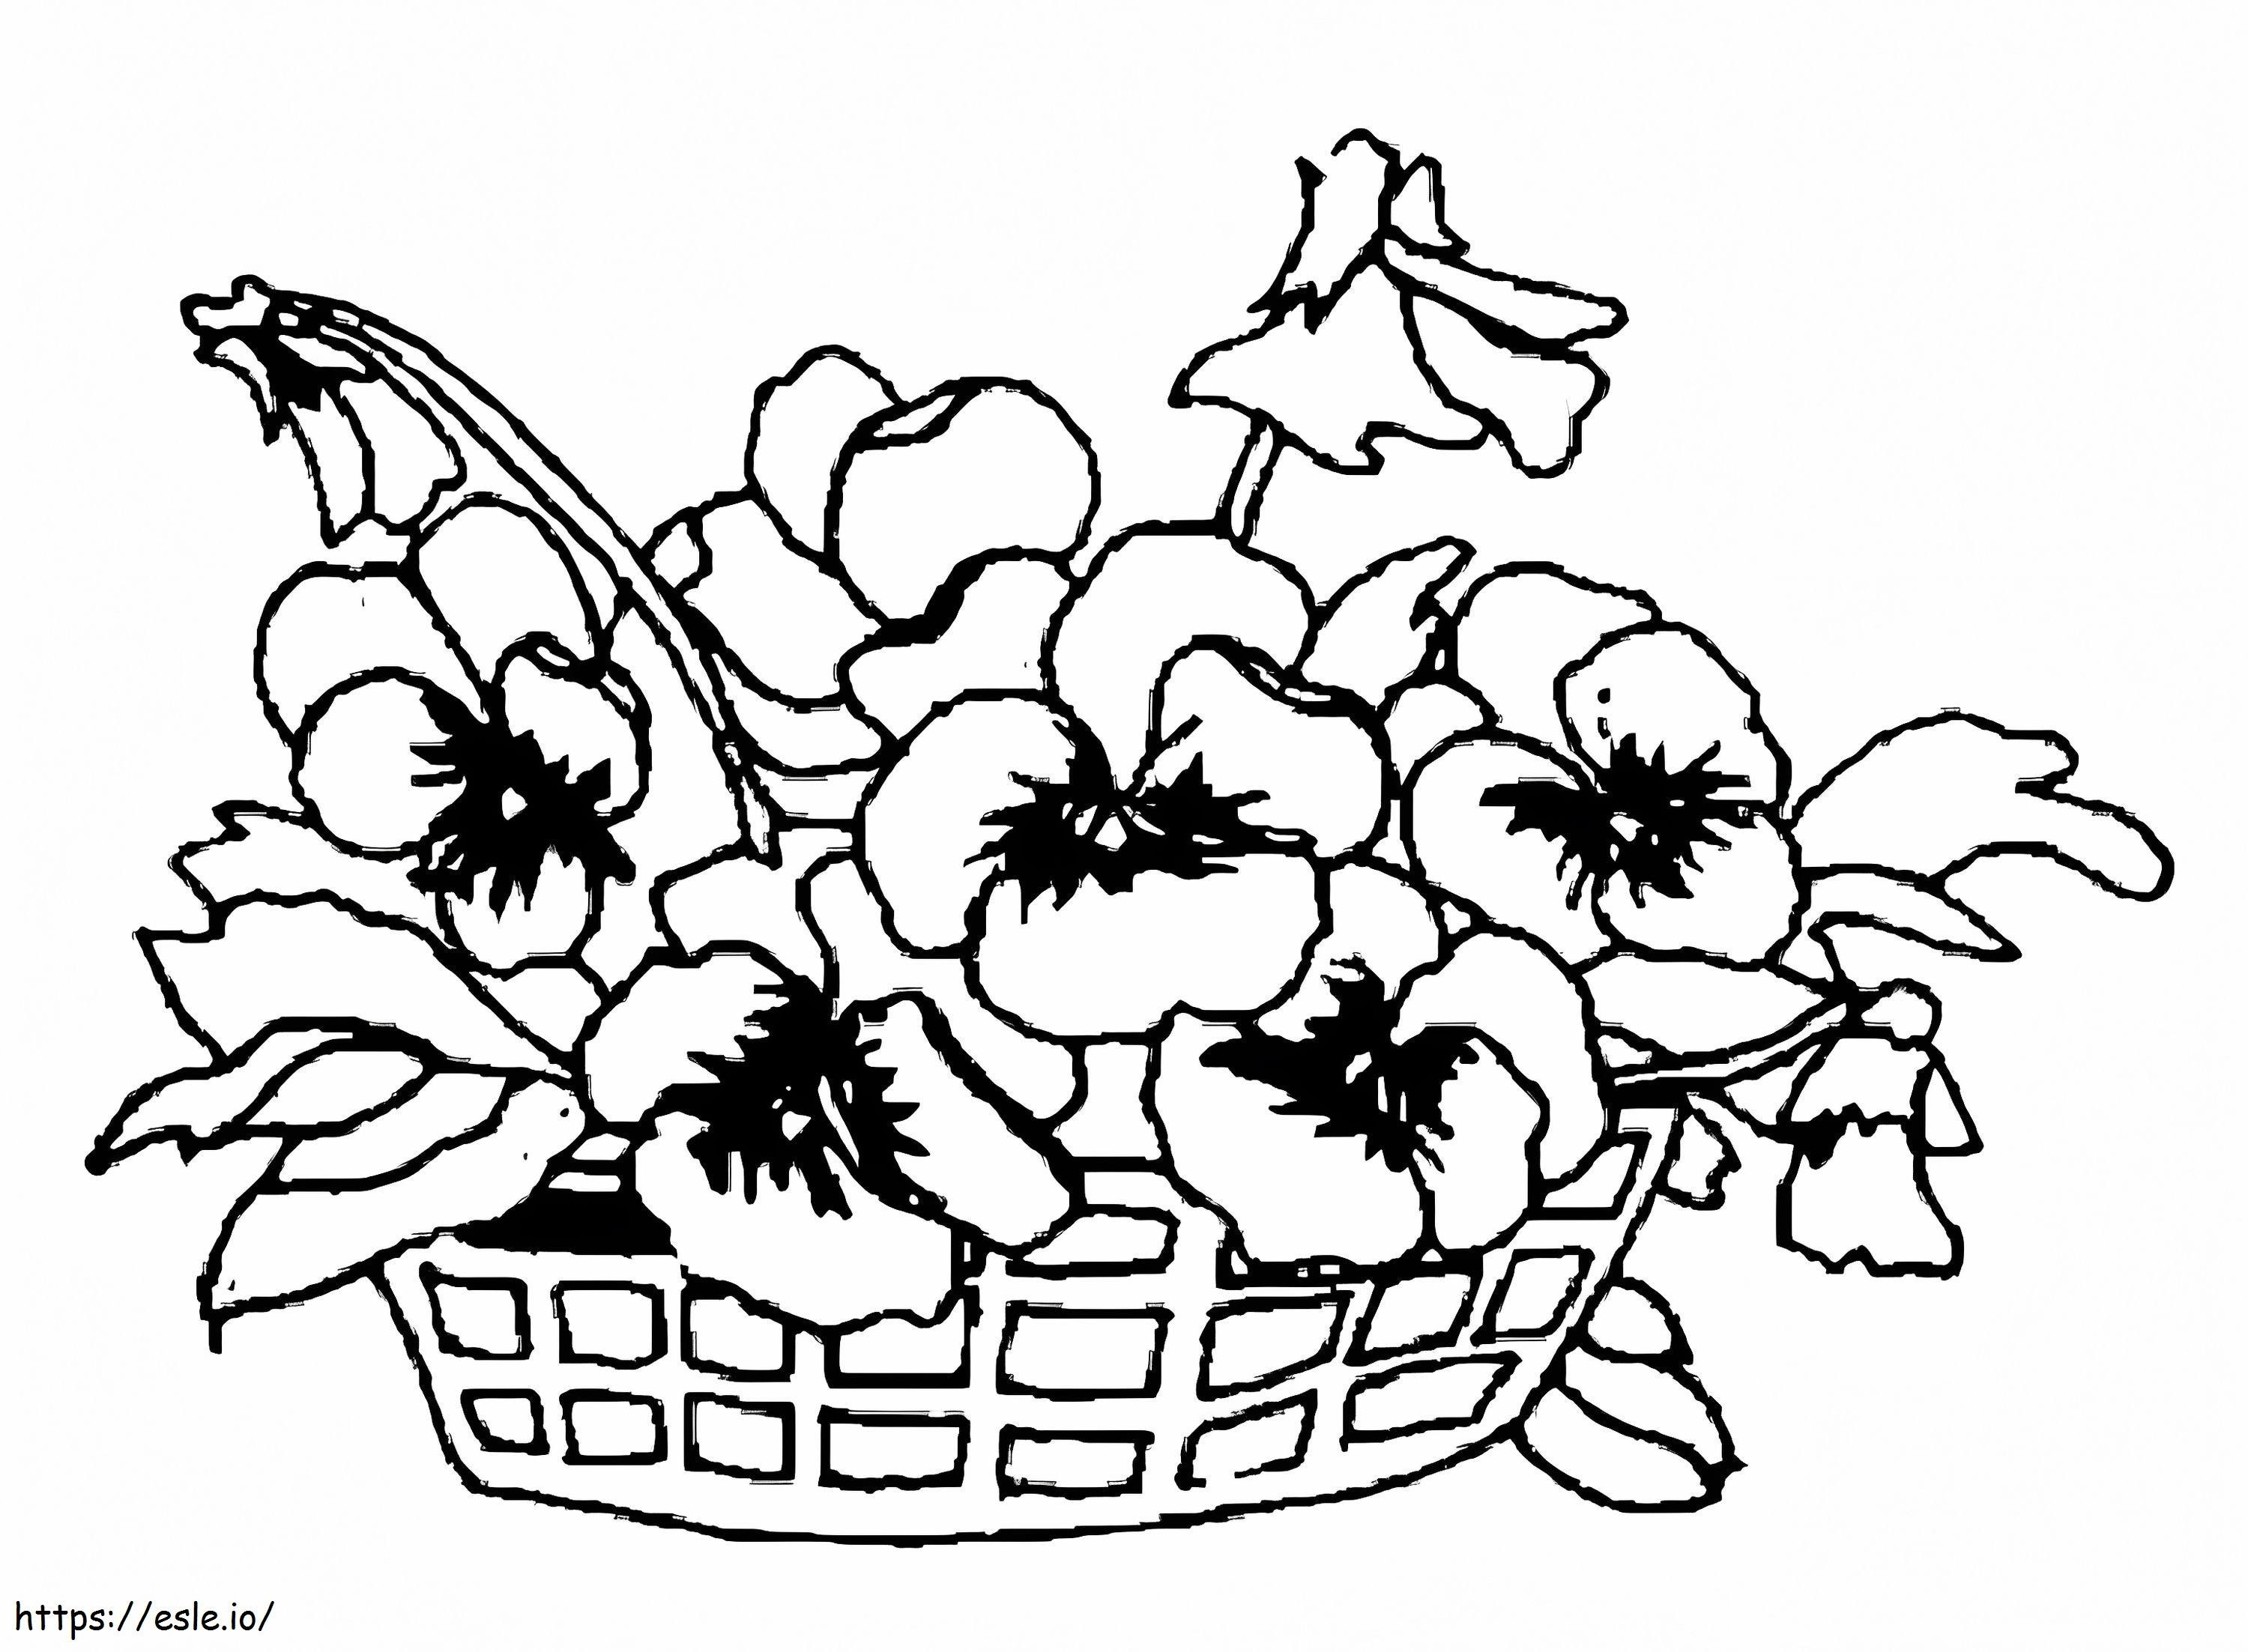 Pansies Basket coloring page